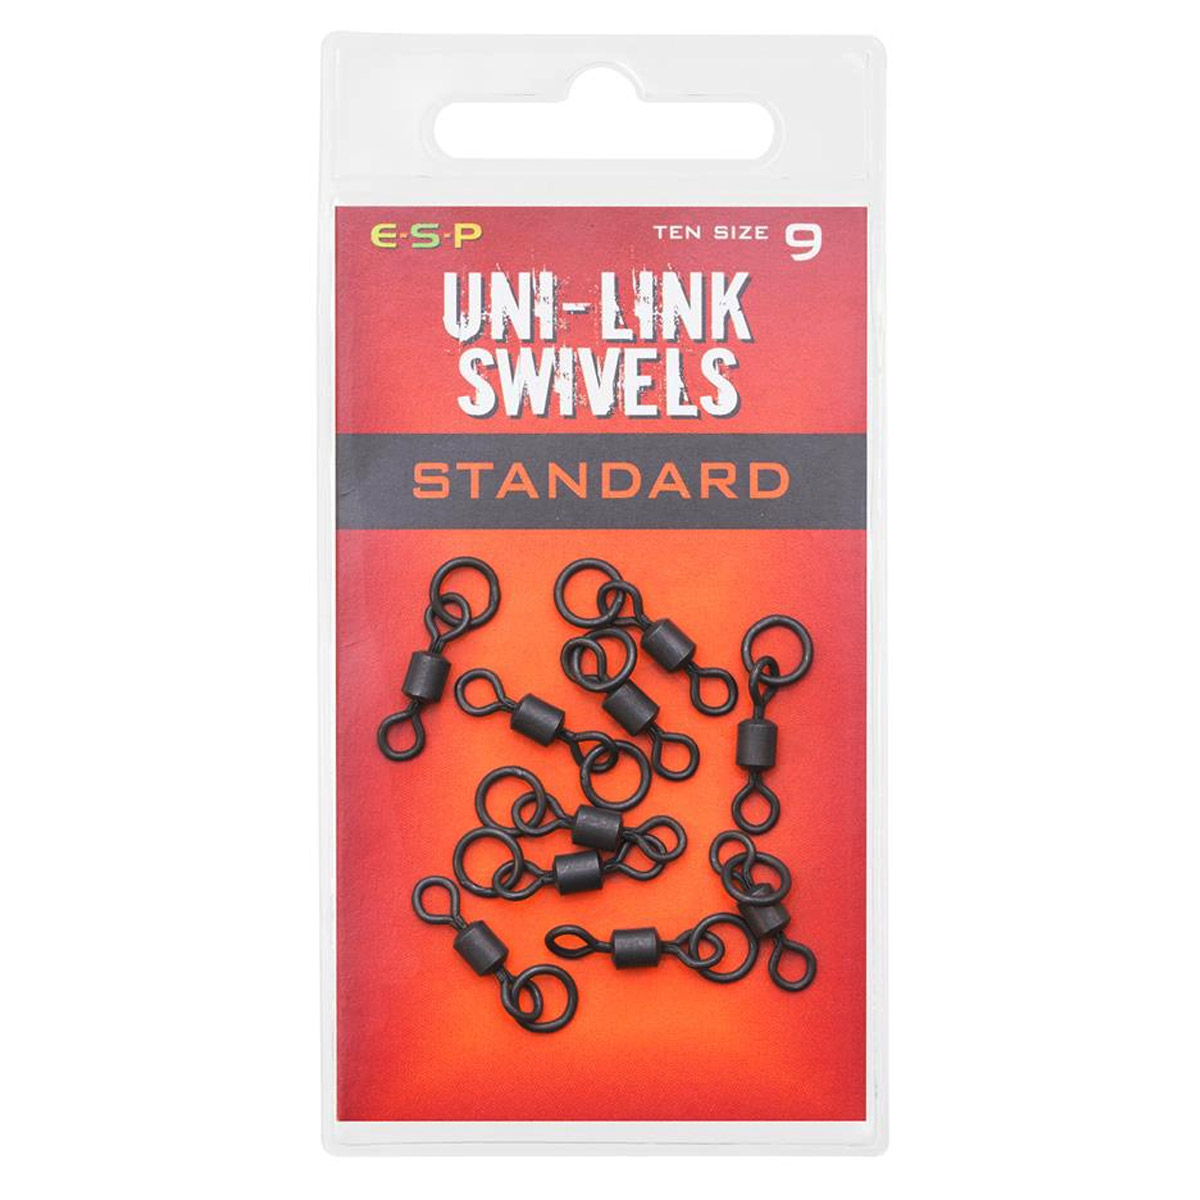 ESP Uni Link Swivel Standaard Size 9